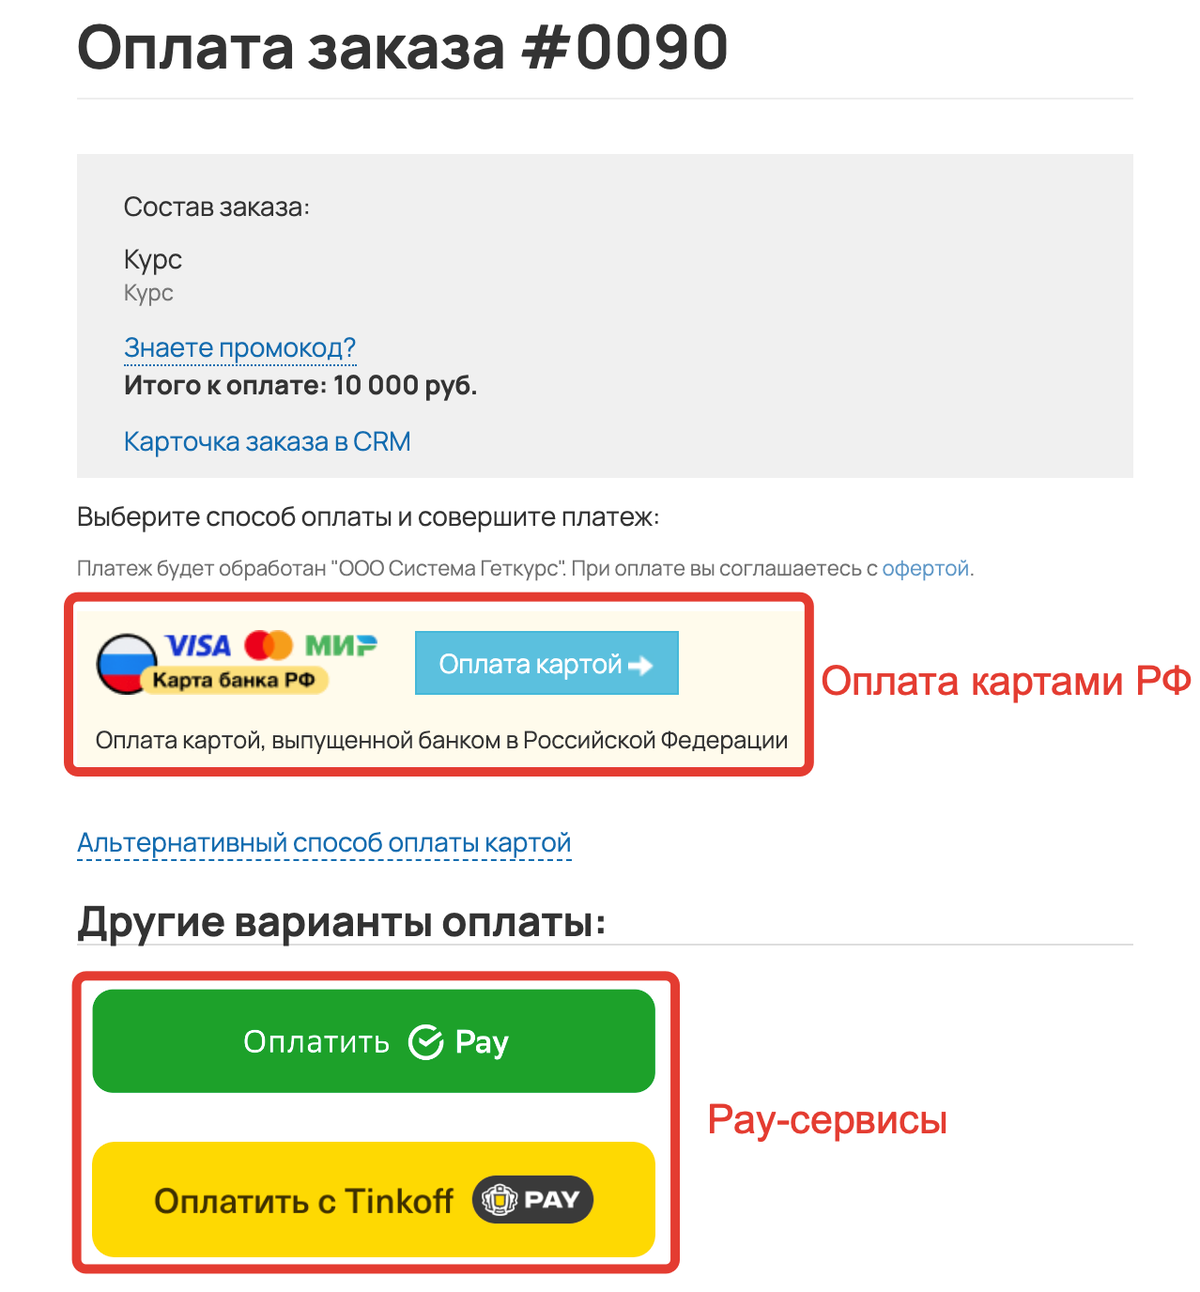 <p>Оплата картой банка РФ и Pay-сервисы	</p>